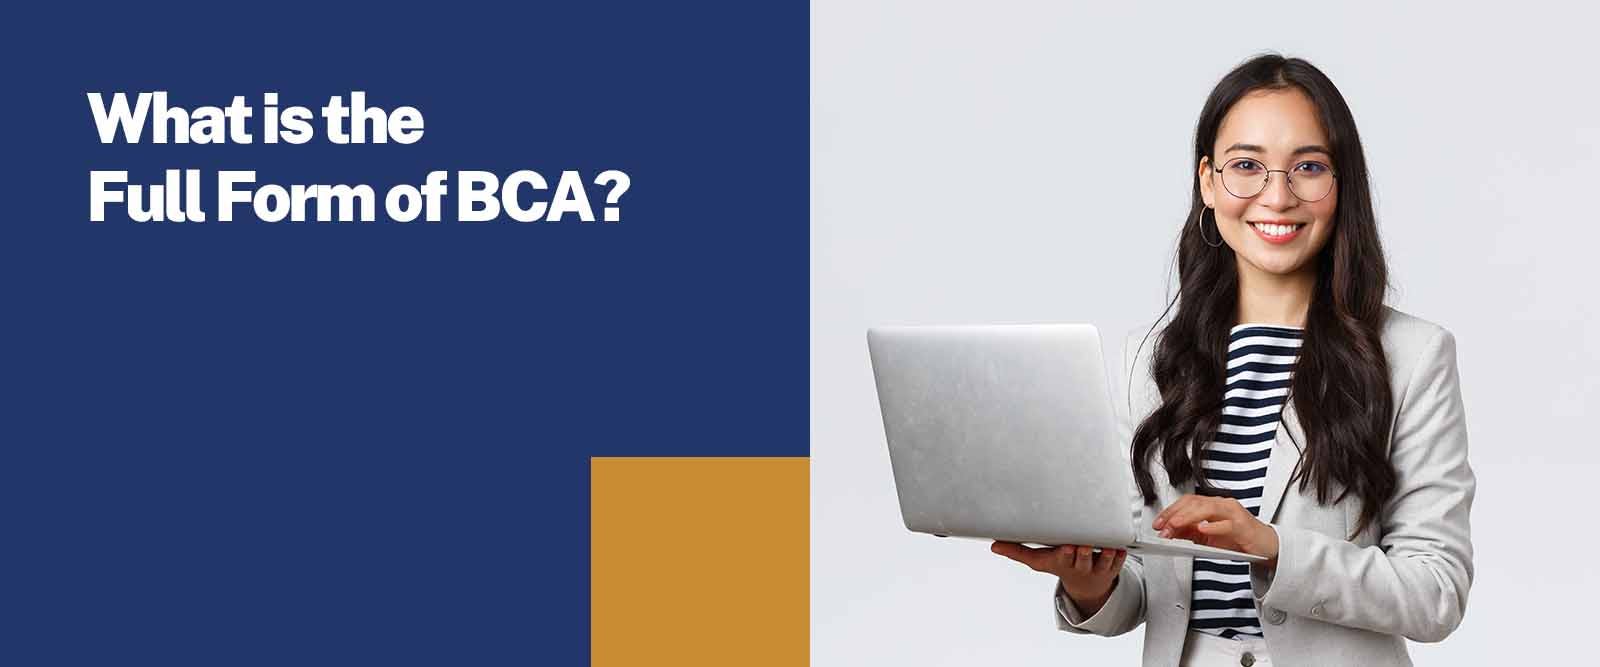 BCA Full Form - What is the Full Form of BCA? | Sunstone Blog